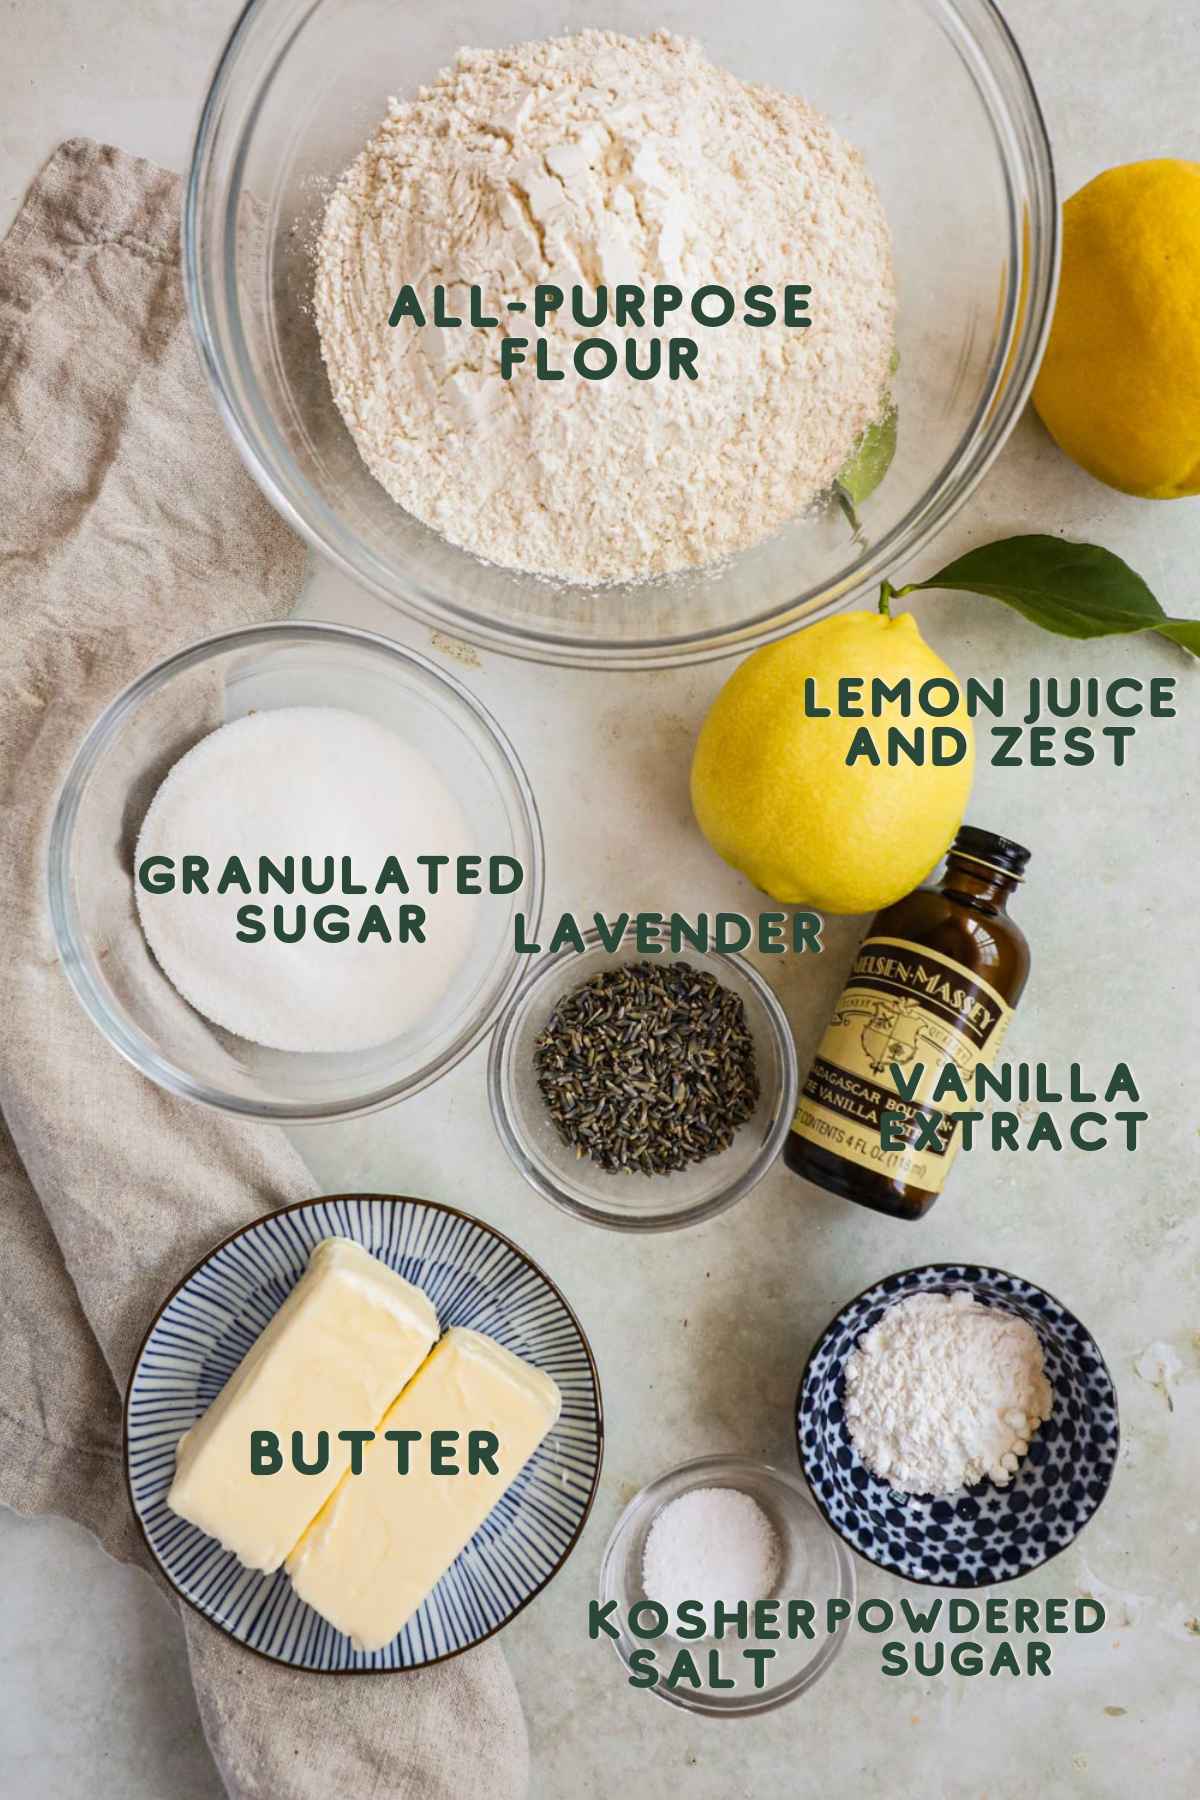 Ingredients for lemon lavender shortbread cookies, flour, lemon juice and zest, sugar, lavender, vanilla extract, salt, butter, powdered sugar.